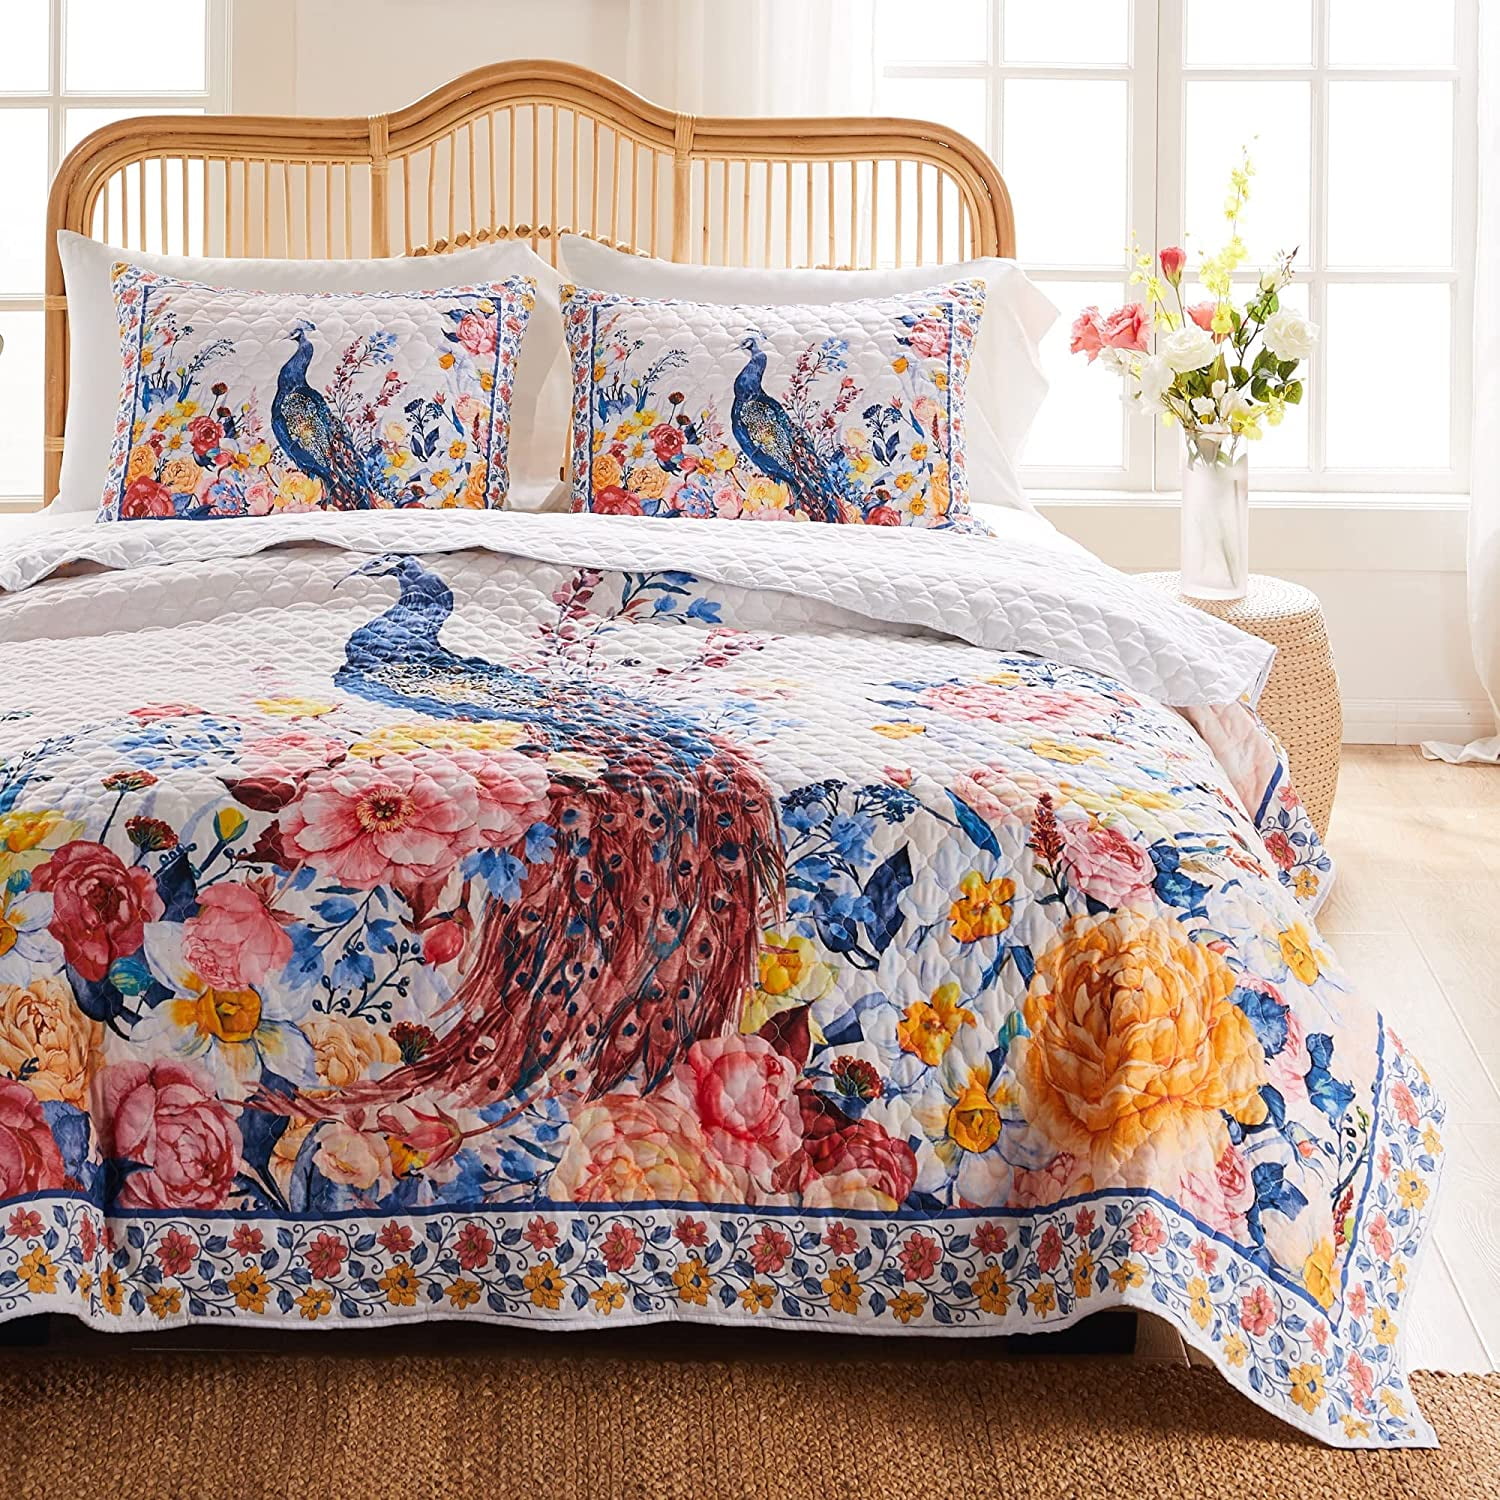 Details about   Lavender Quilted Bedspread & Pillow Shams Set Watercolor Art Plant Print 